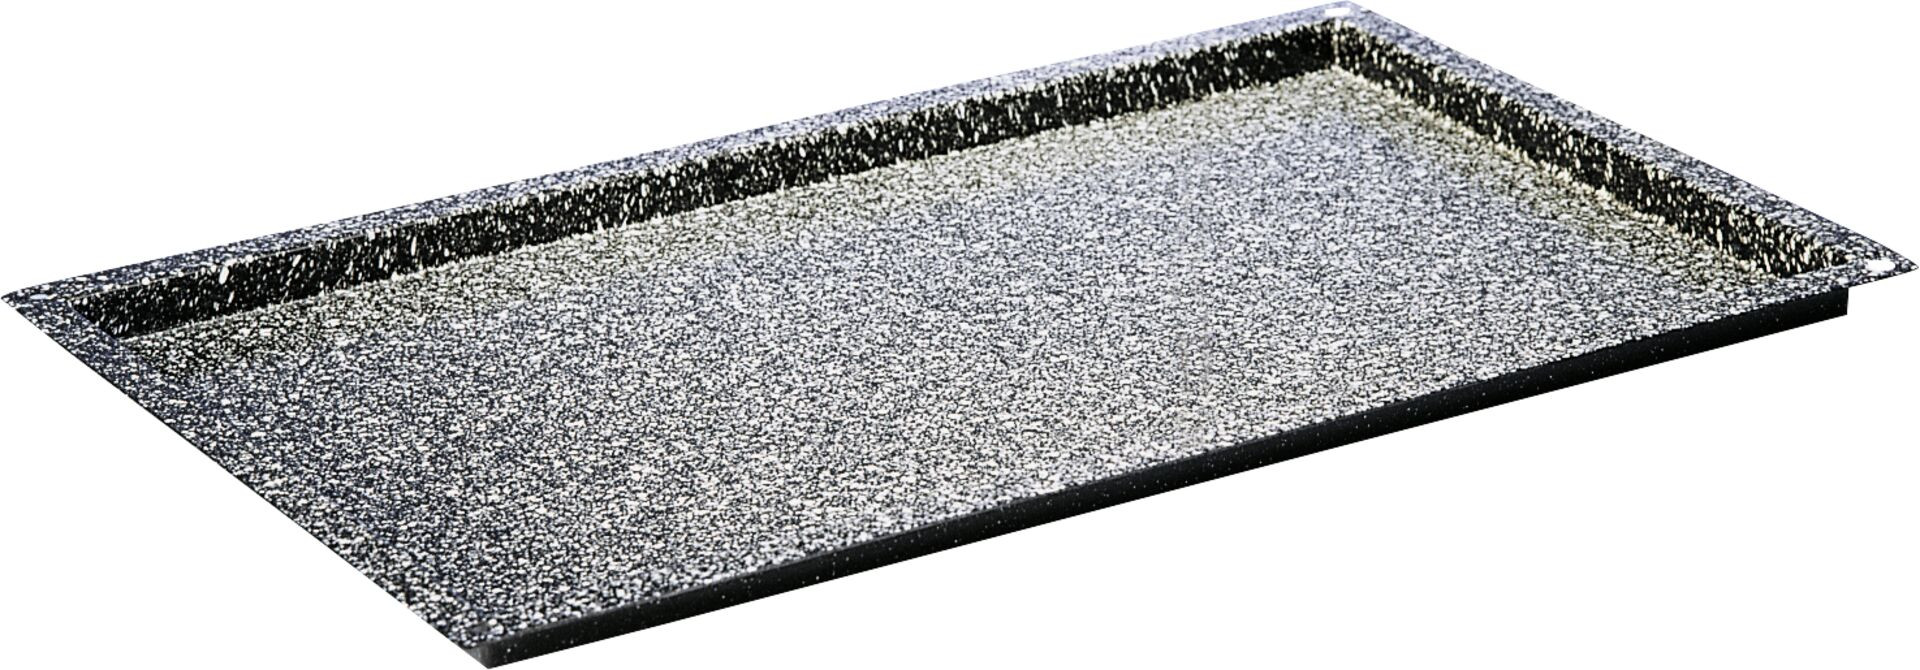 Konvektomatenblech GN 2/3 Granit-Emaille 2 cm